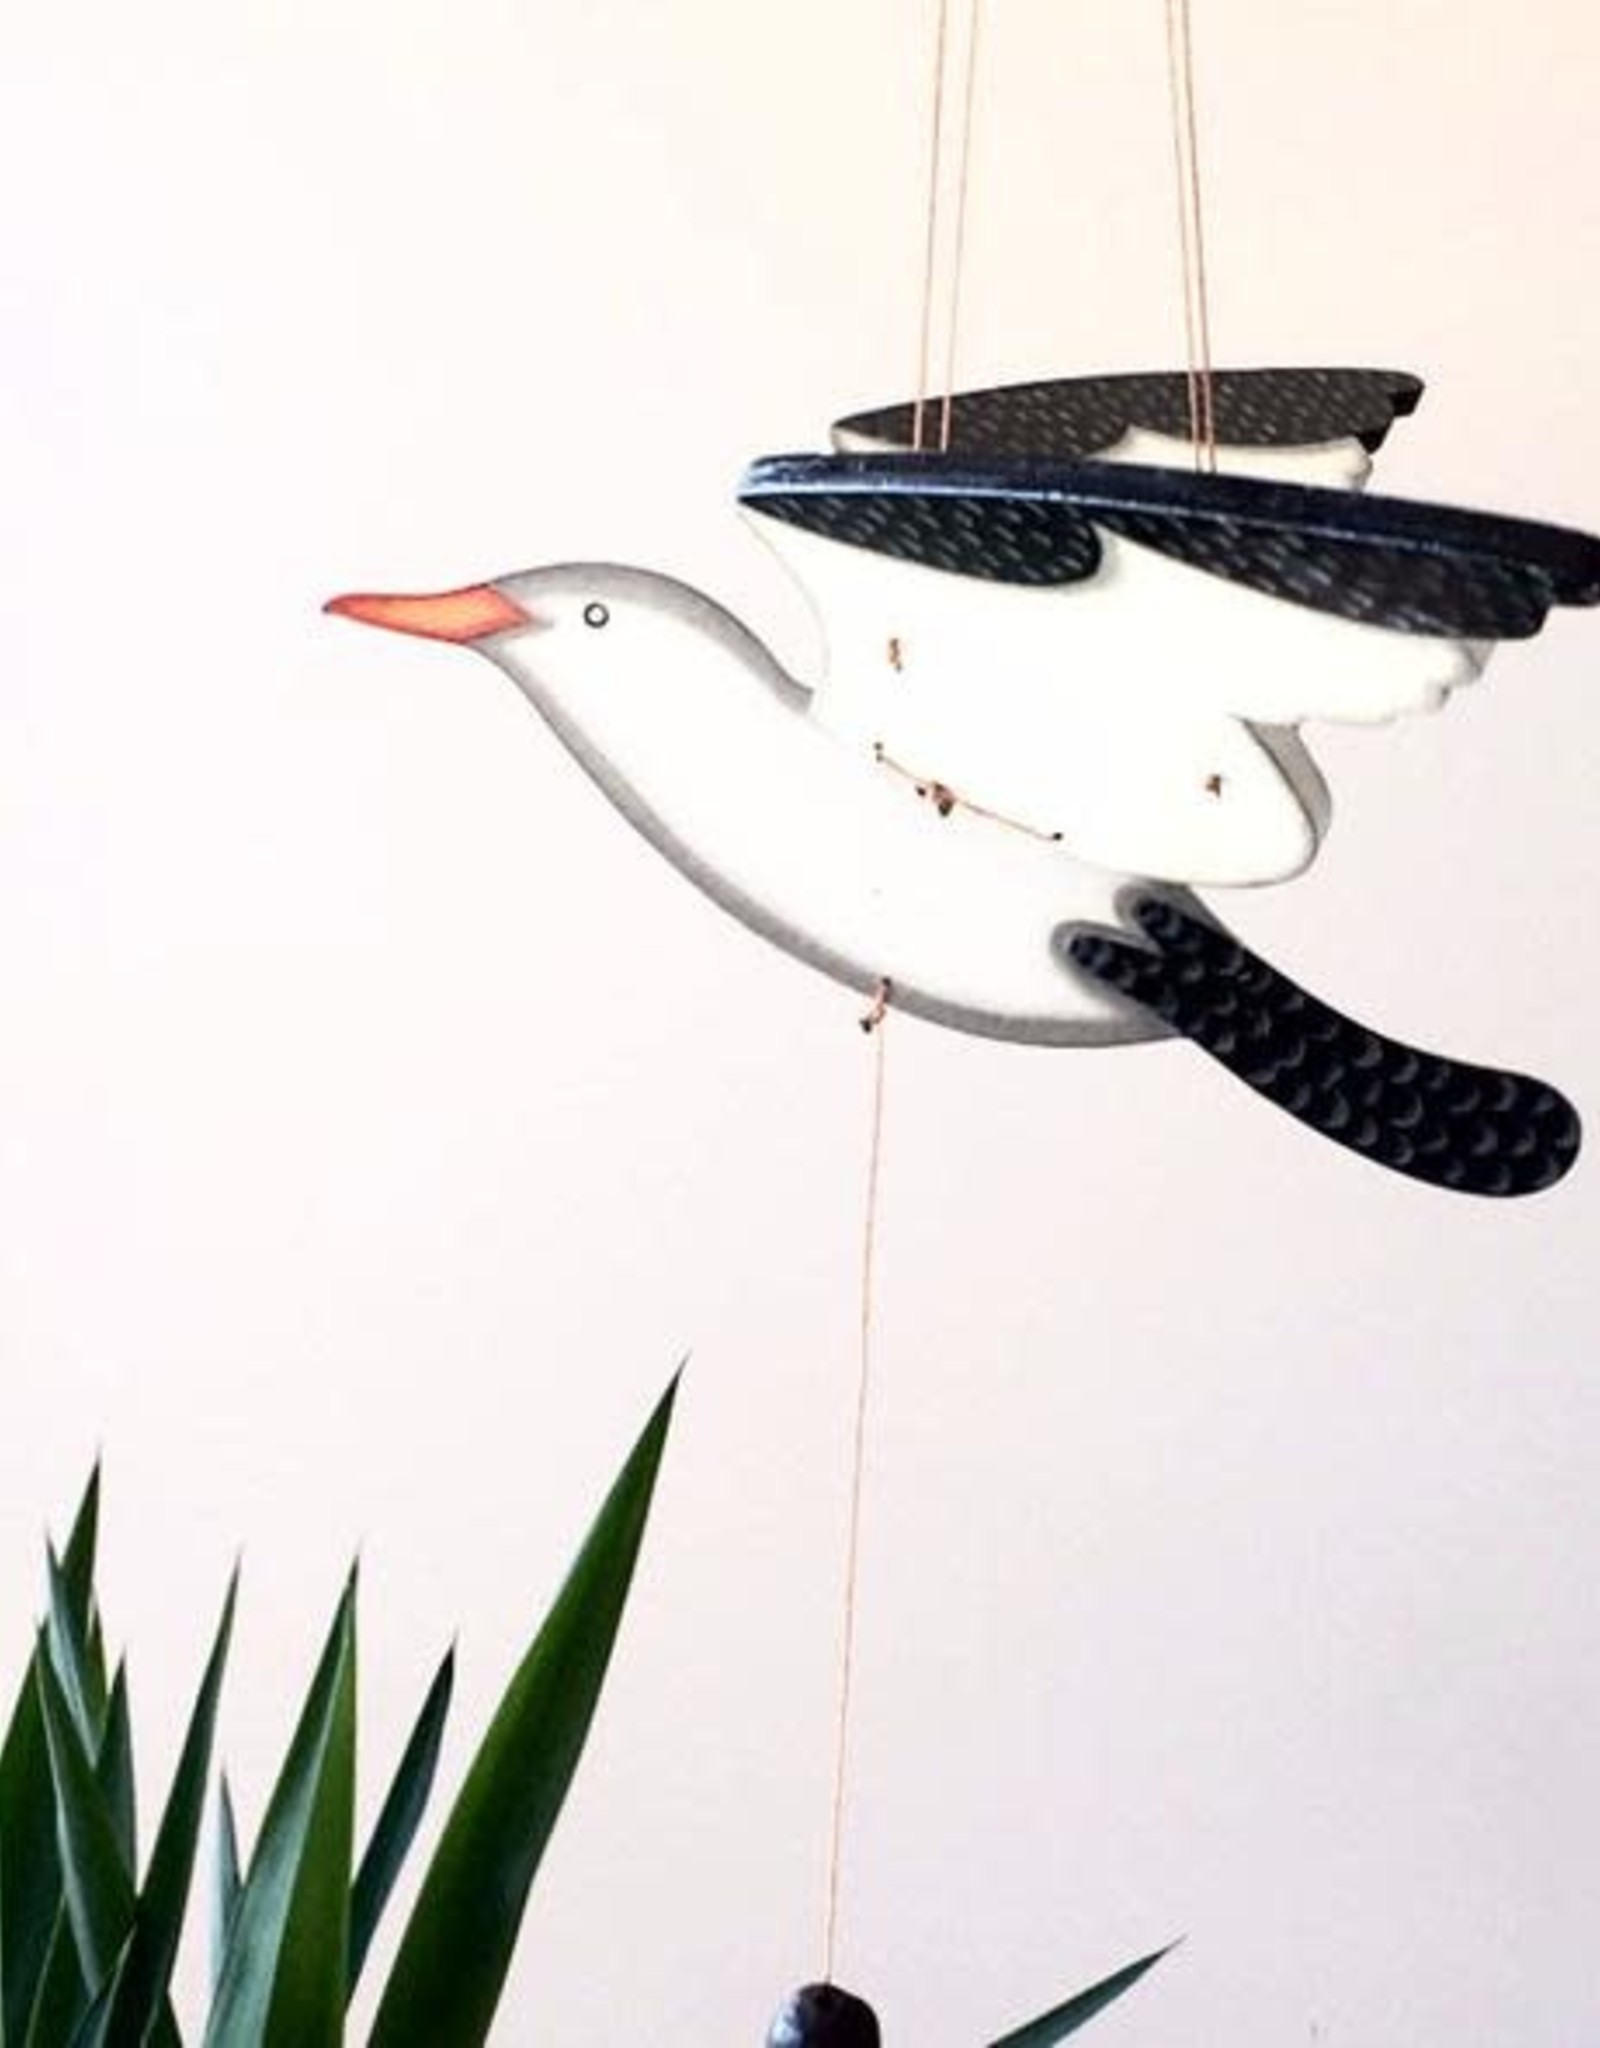 Tulia Artisans Seagull Flying Bird Mobile